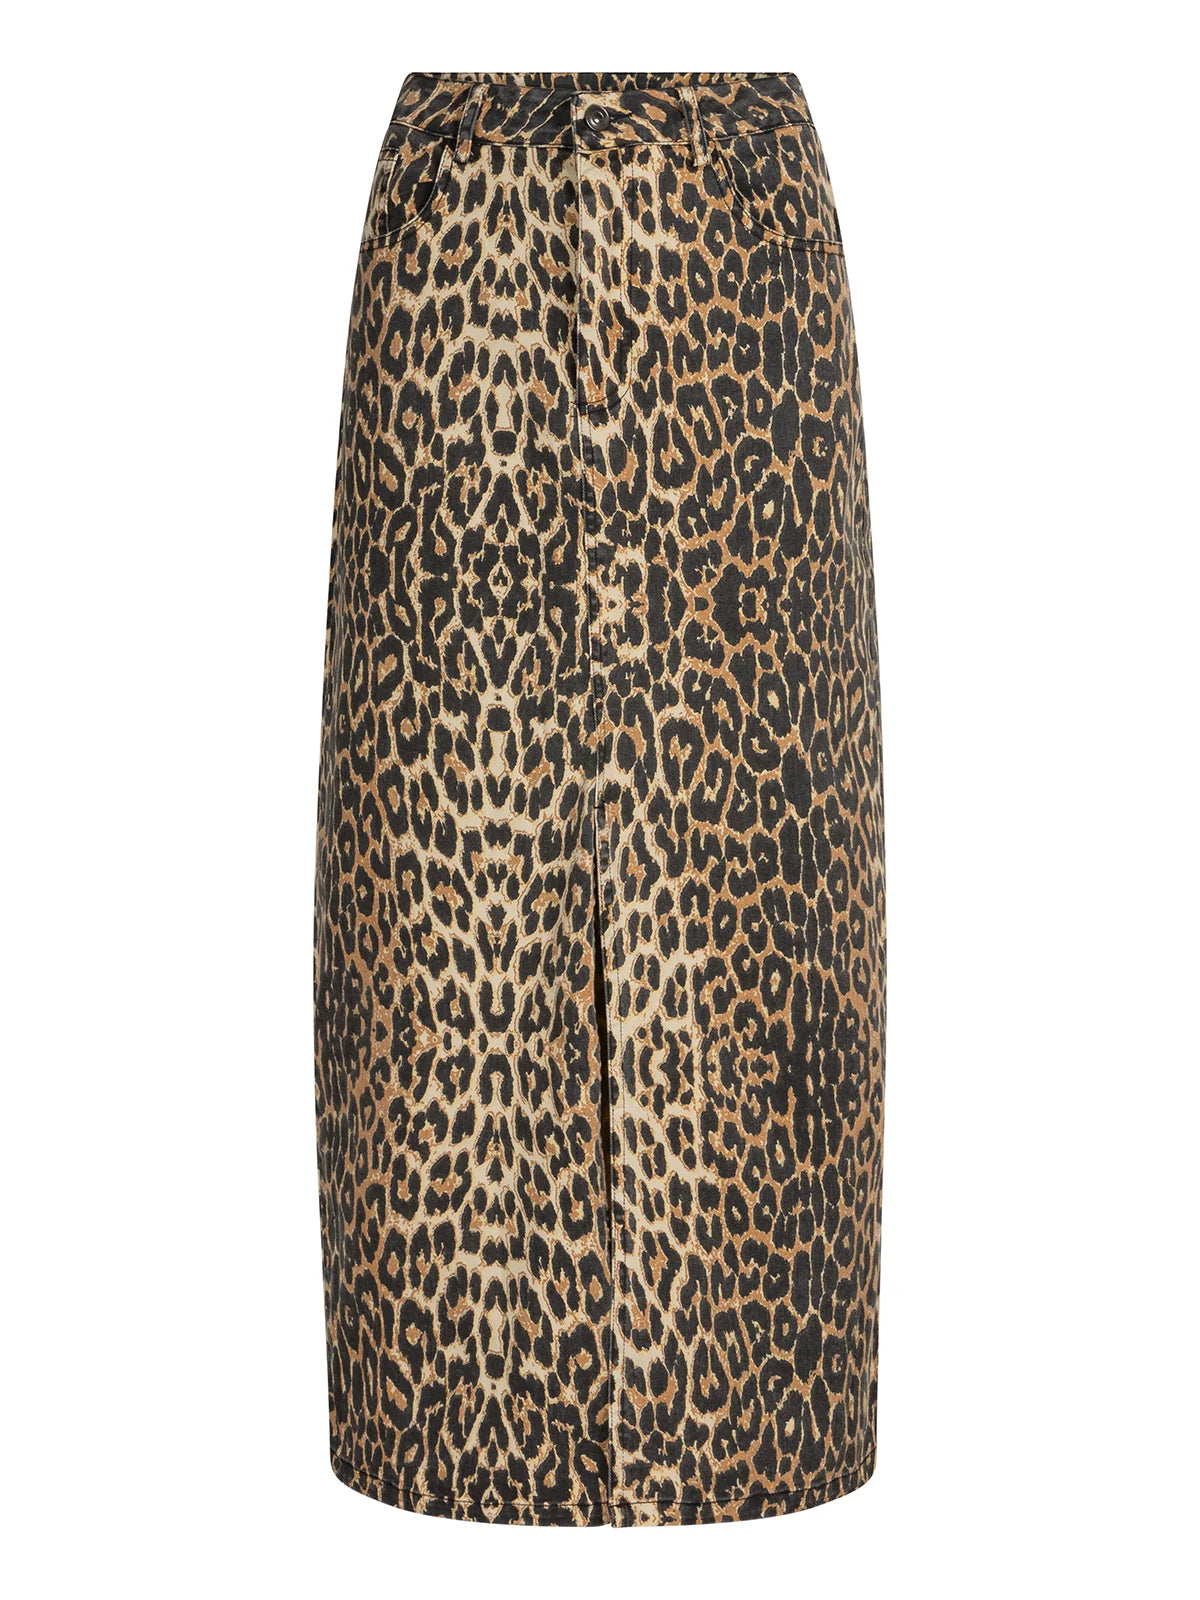 Ambika Mia Skirt Leopard Animal